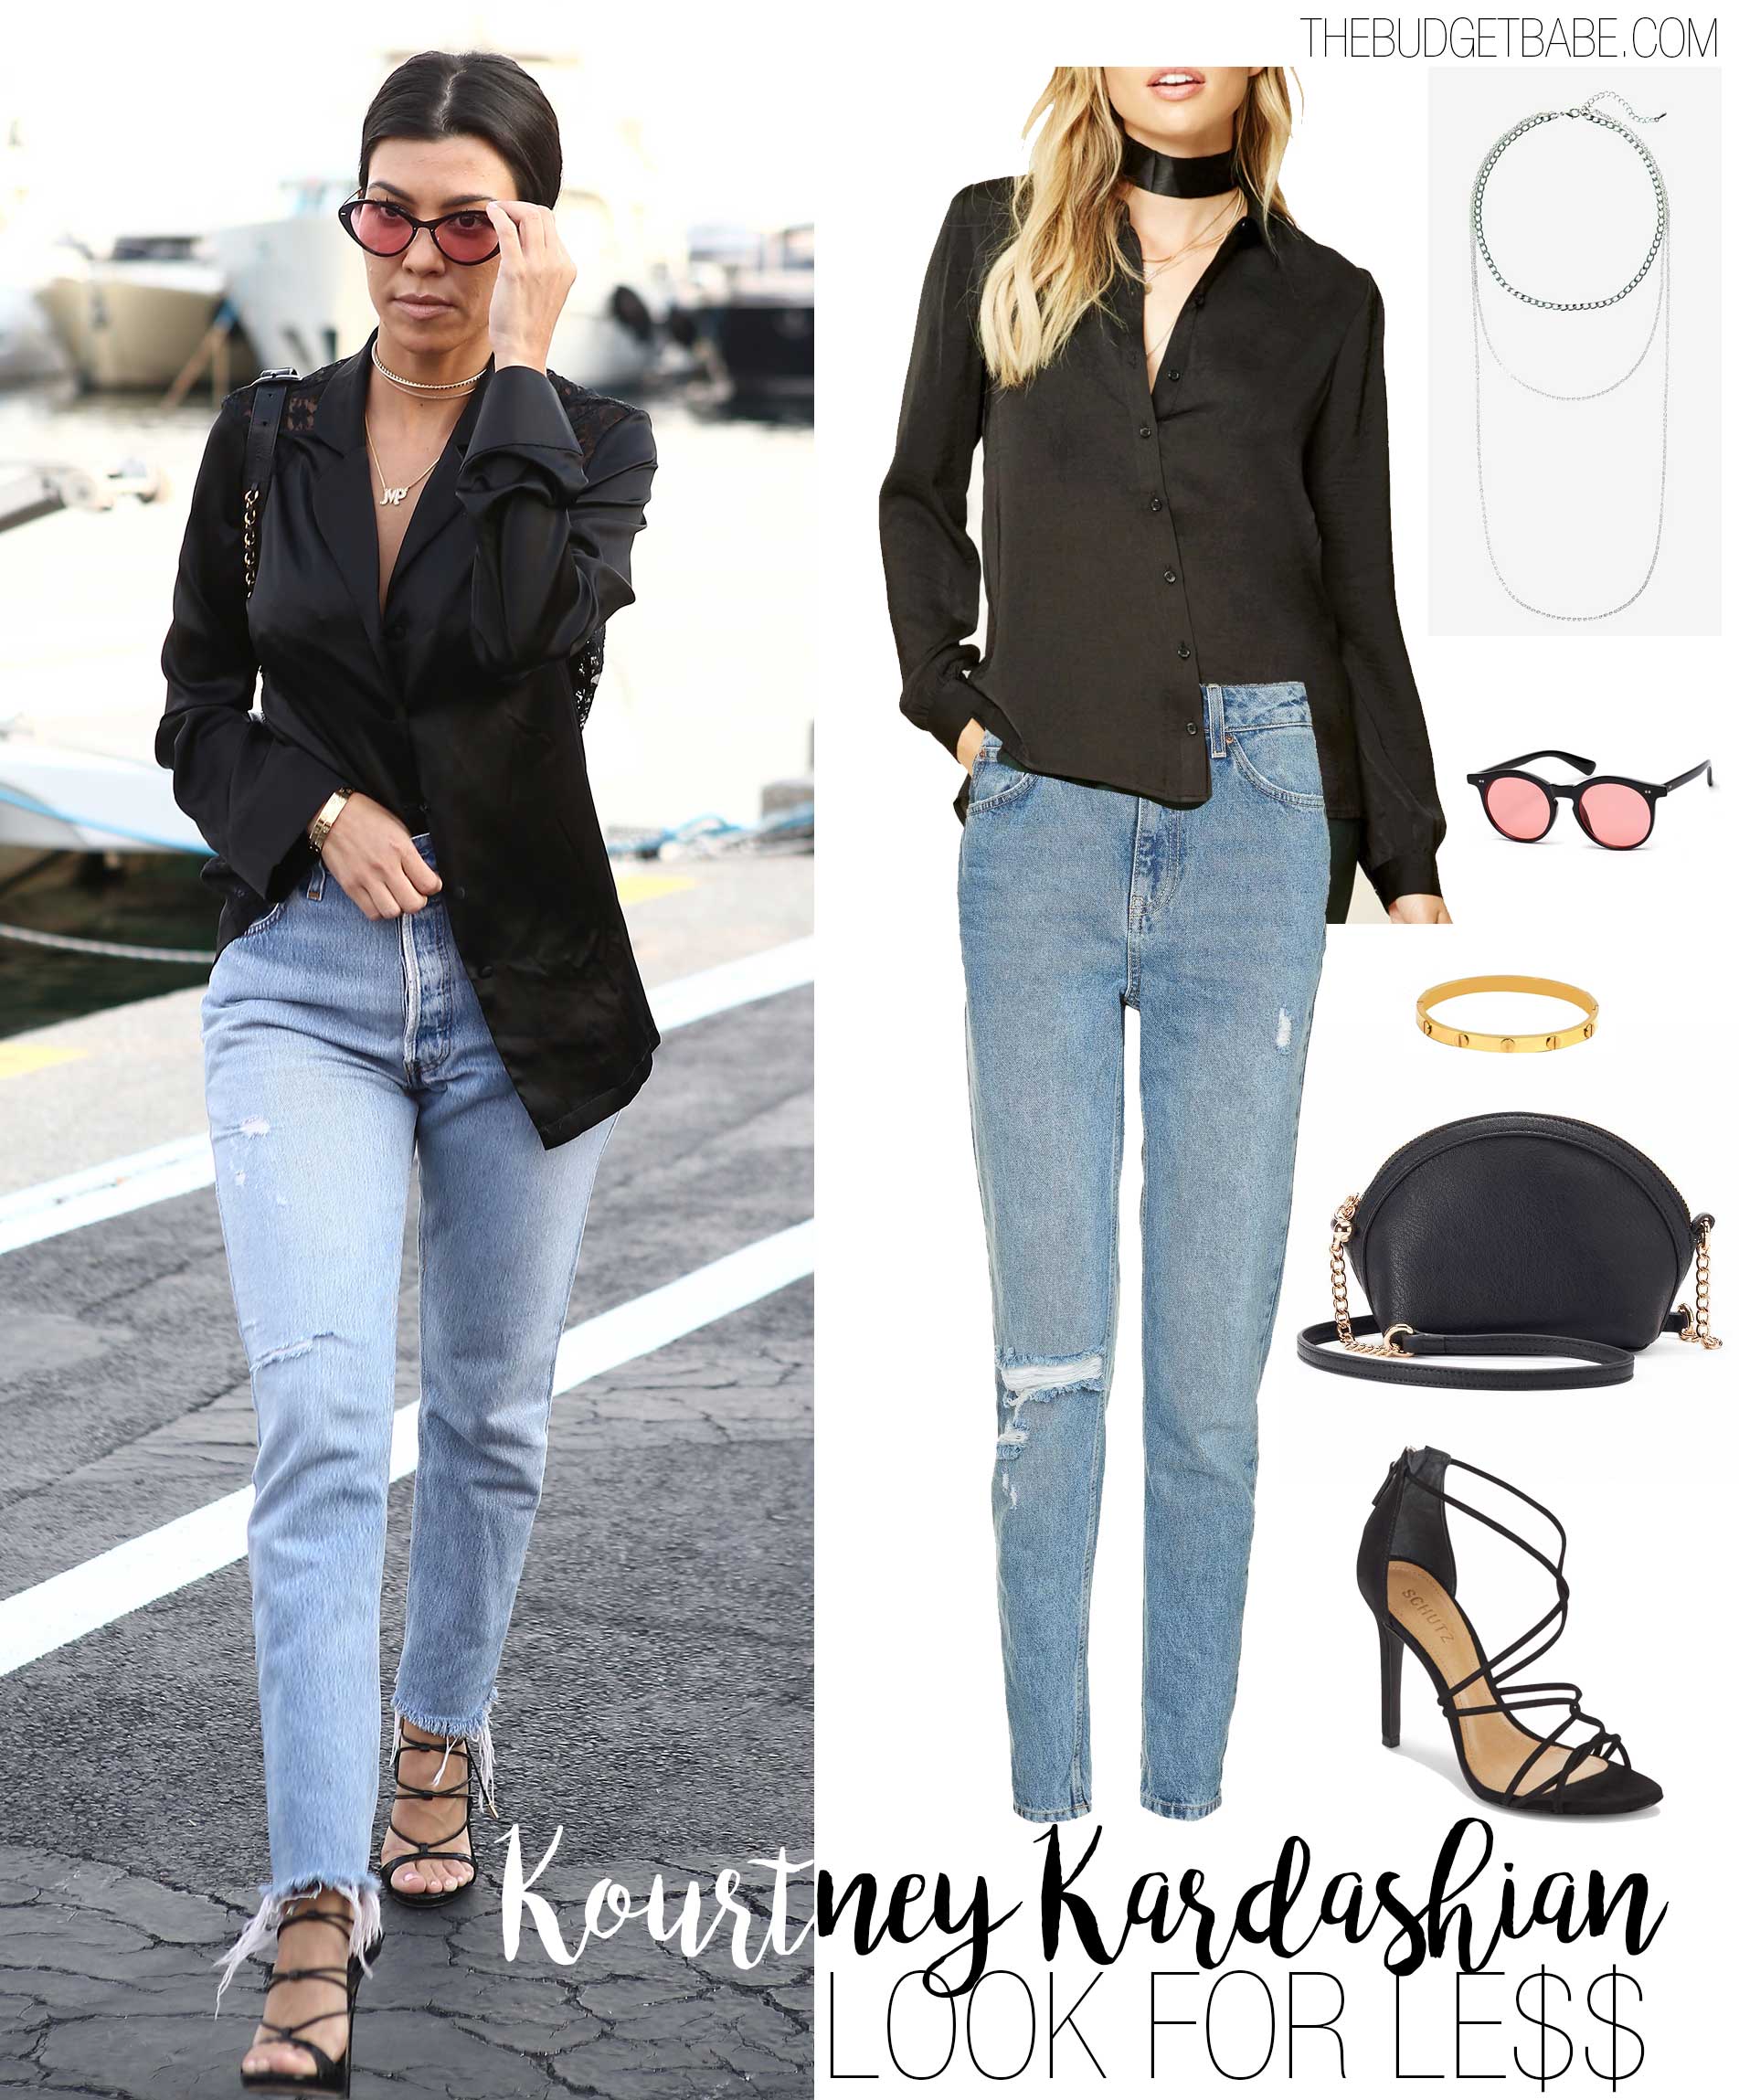 Kourtney Kardashian showed off her amazing figure in high-waist jeans and a silk pajama shirt.